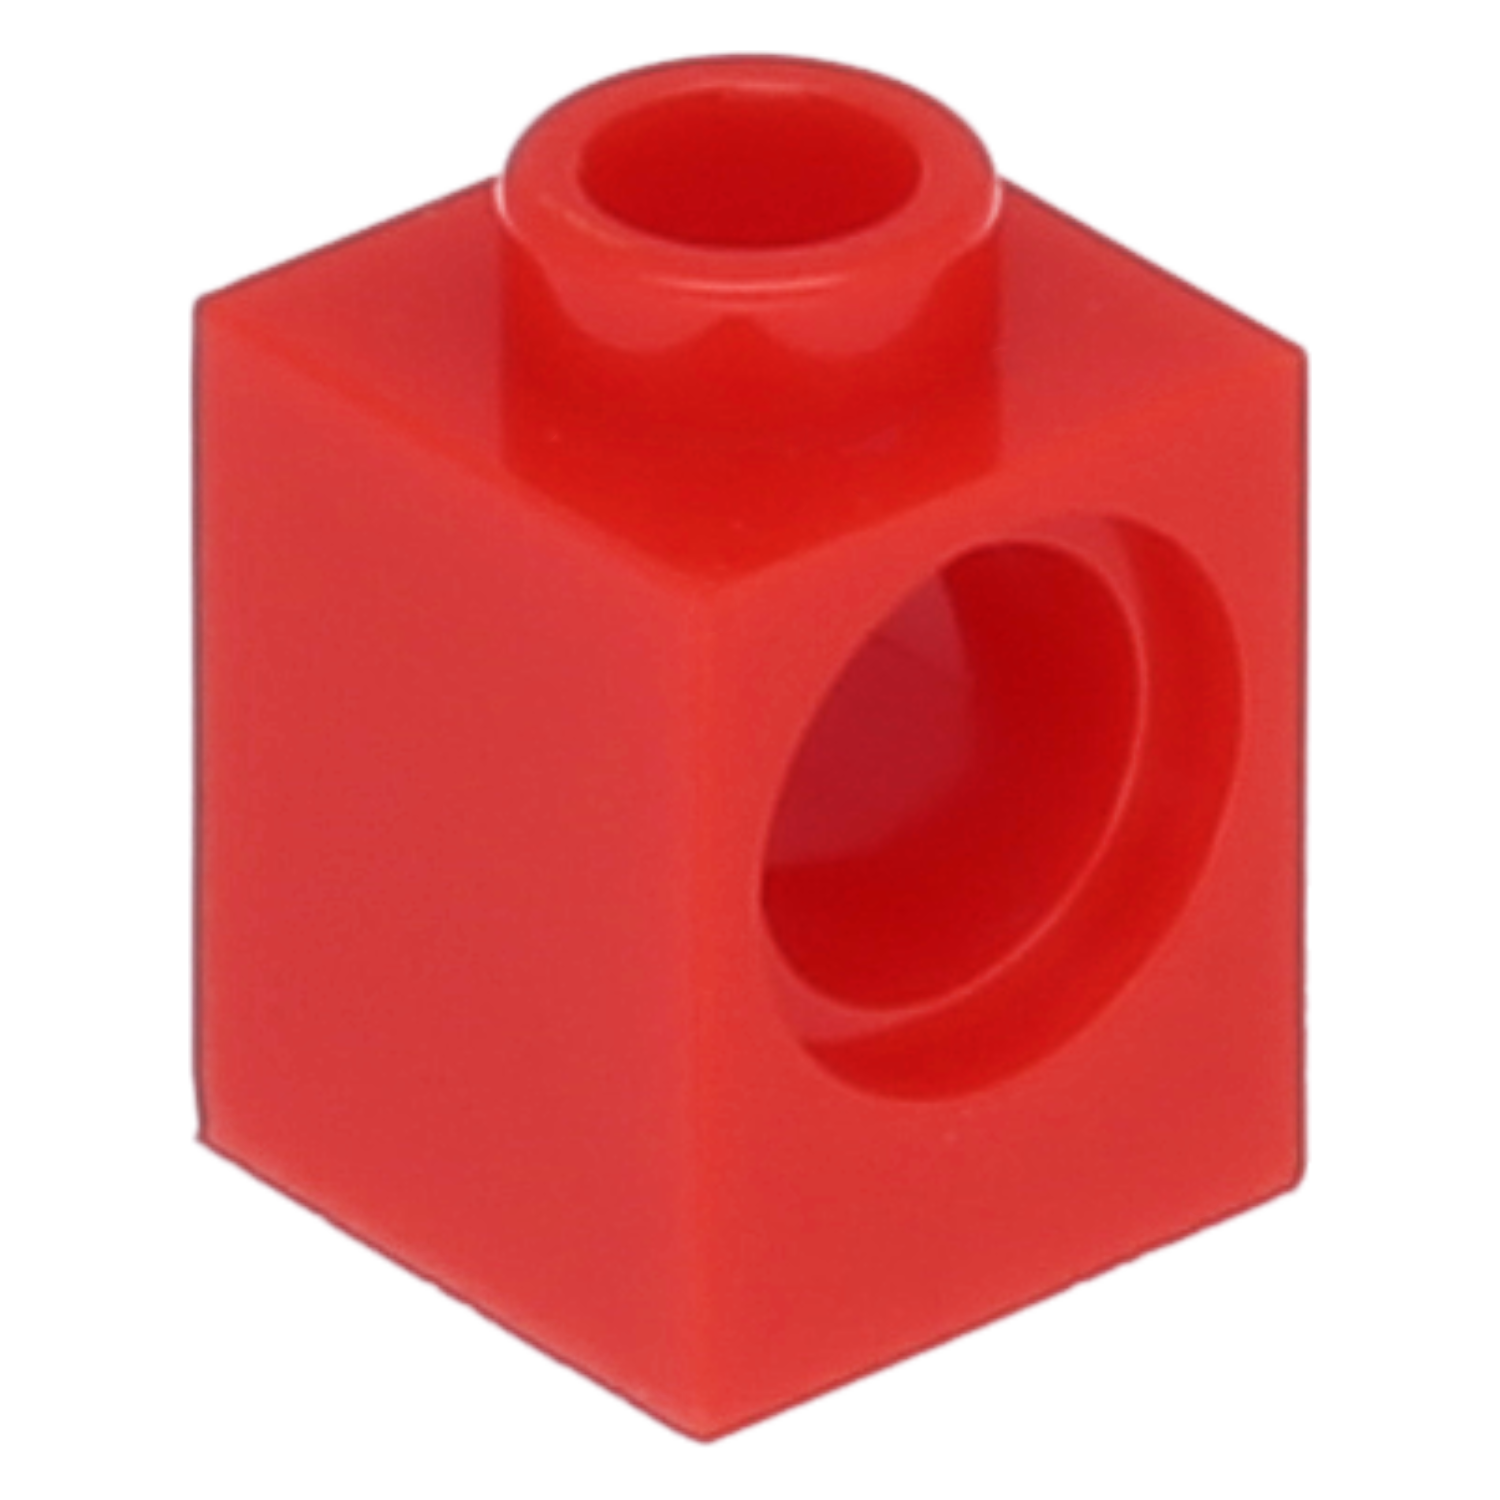 LEGO Technic stones - 1 x 1 with opening